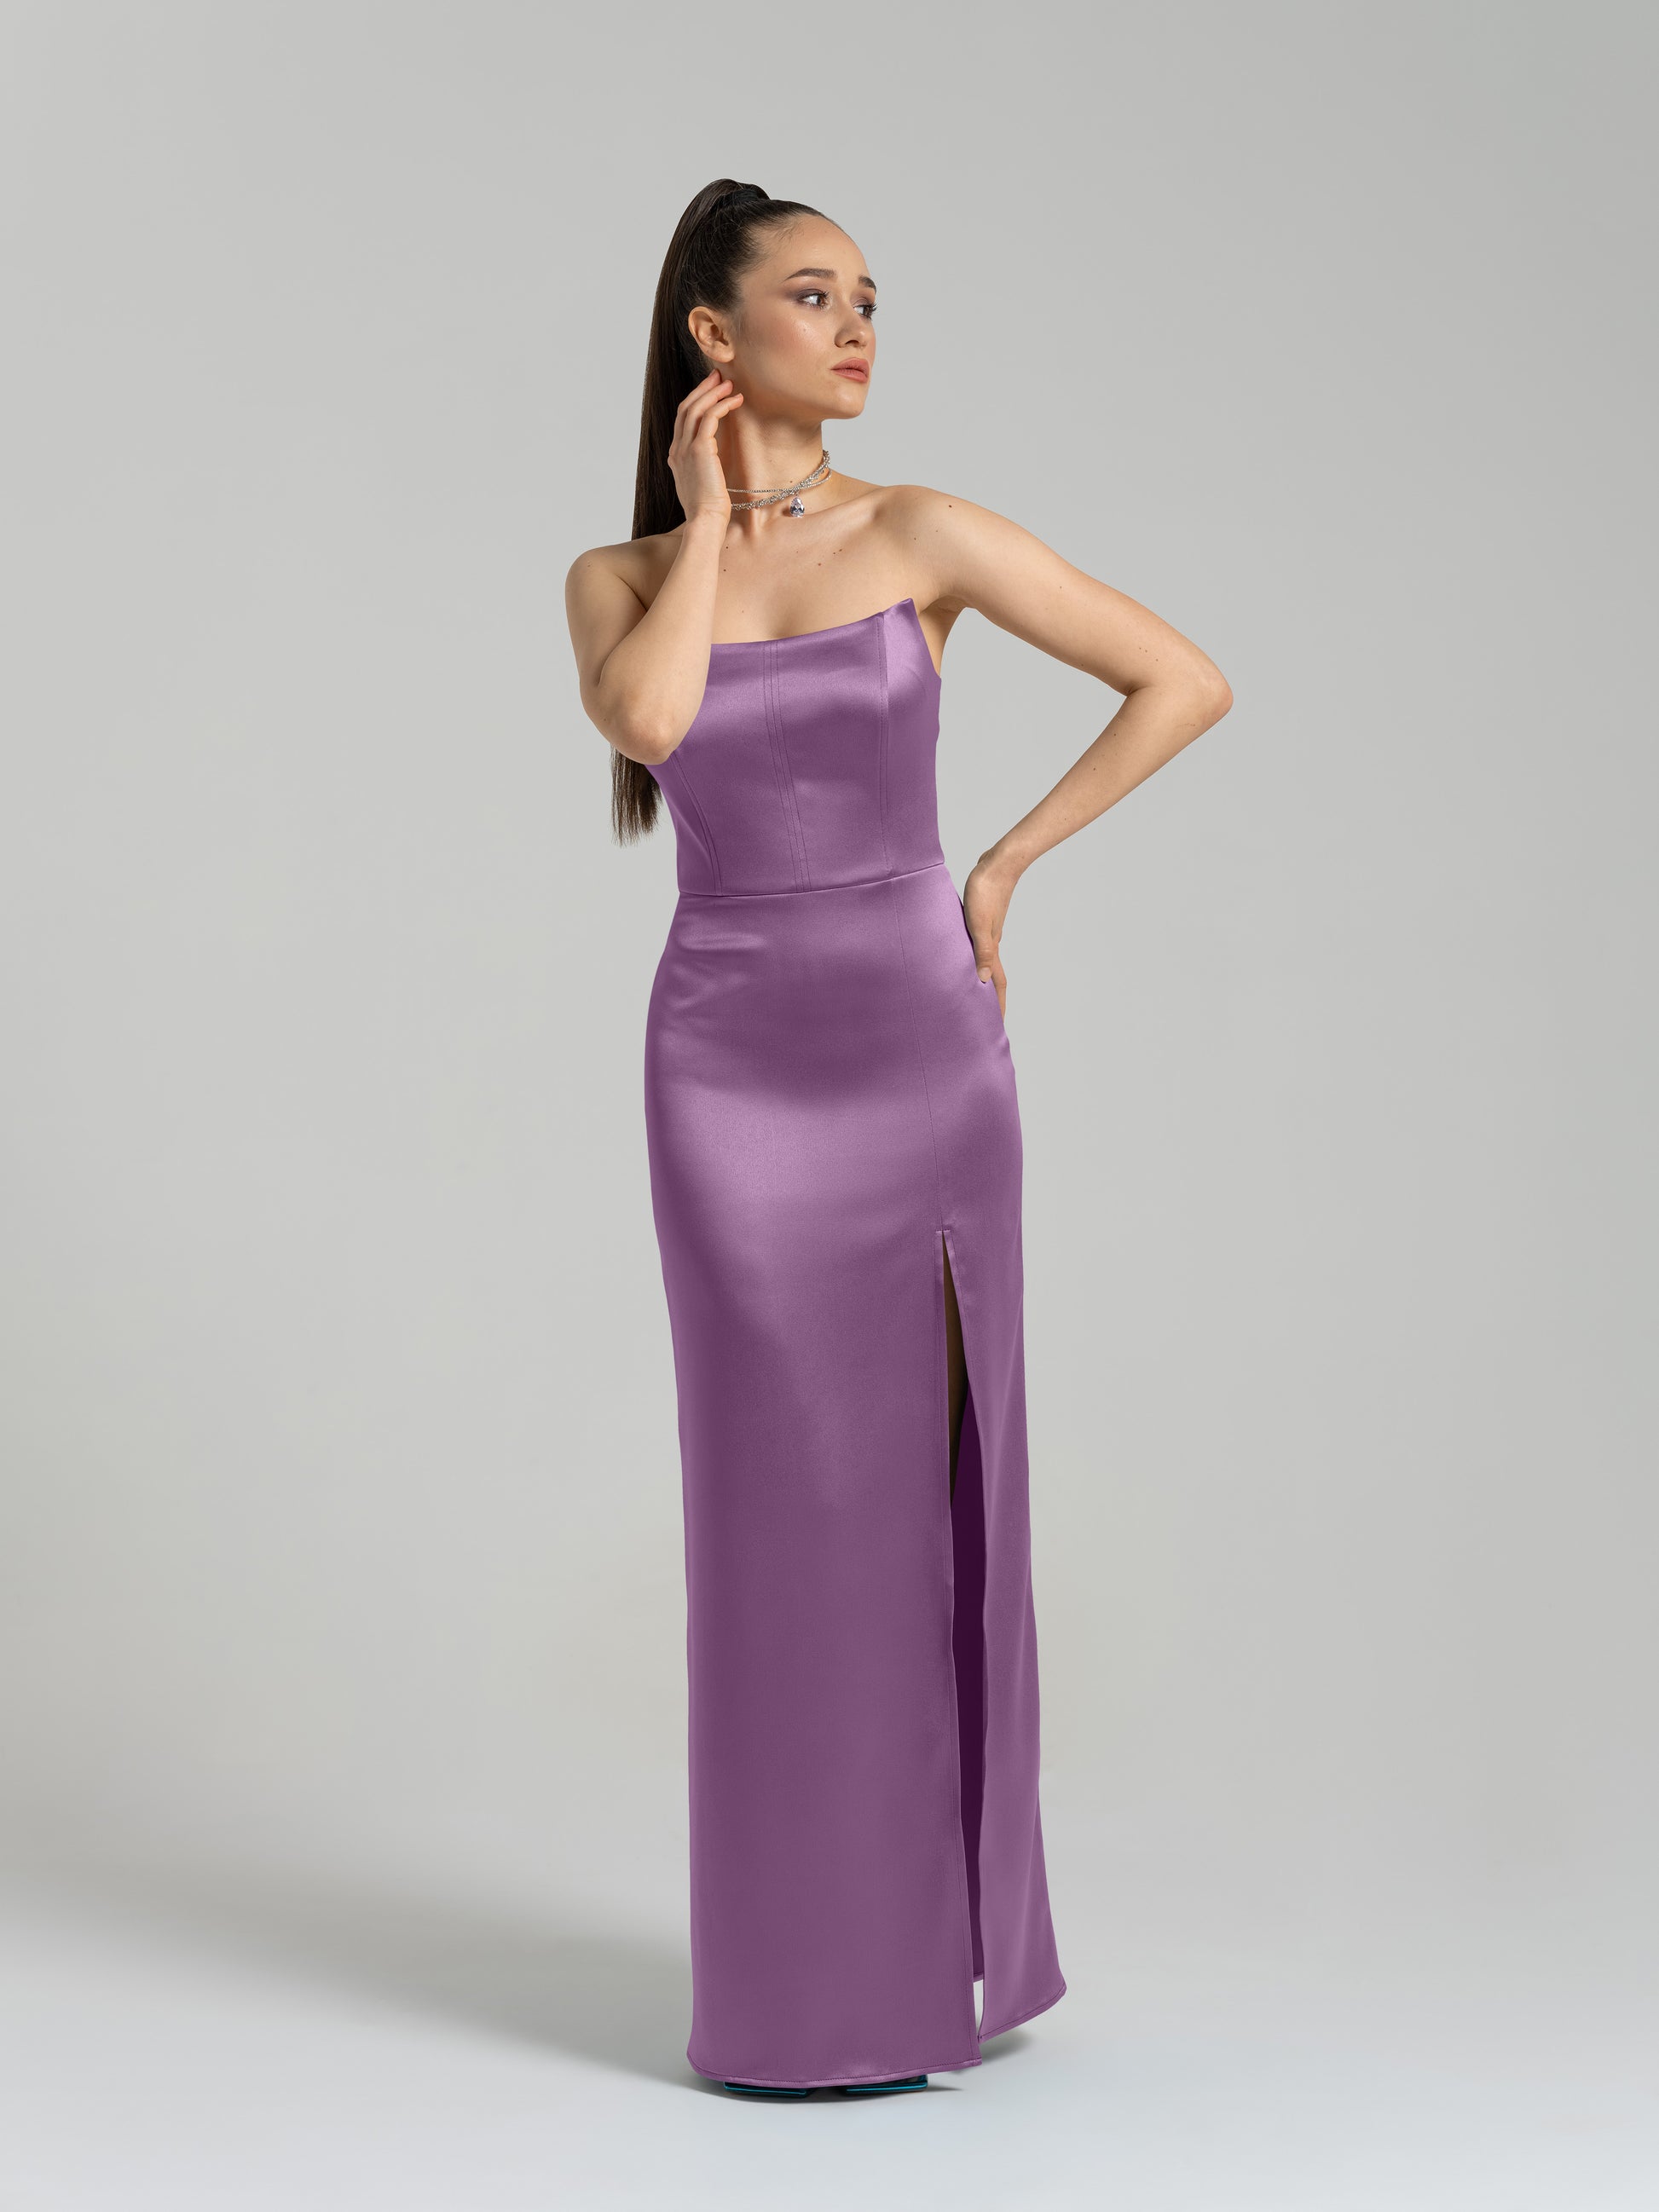 Queen of Hearts Satin Maxi Dress - Posh Purple by Tia Dorraine Women's Luxury Fashion Designer Clothing Brand